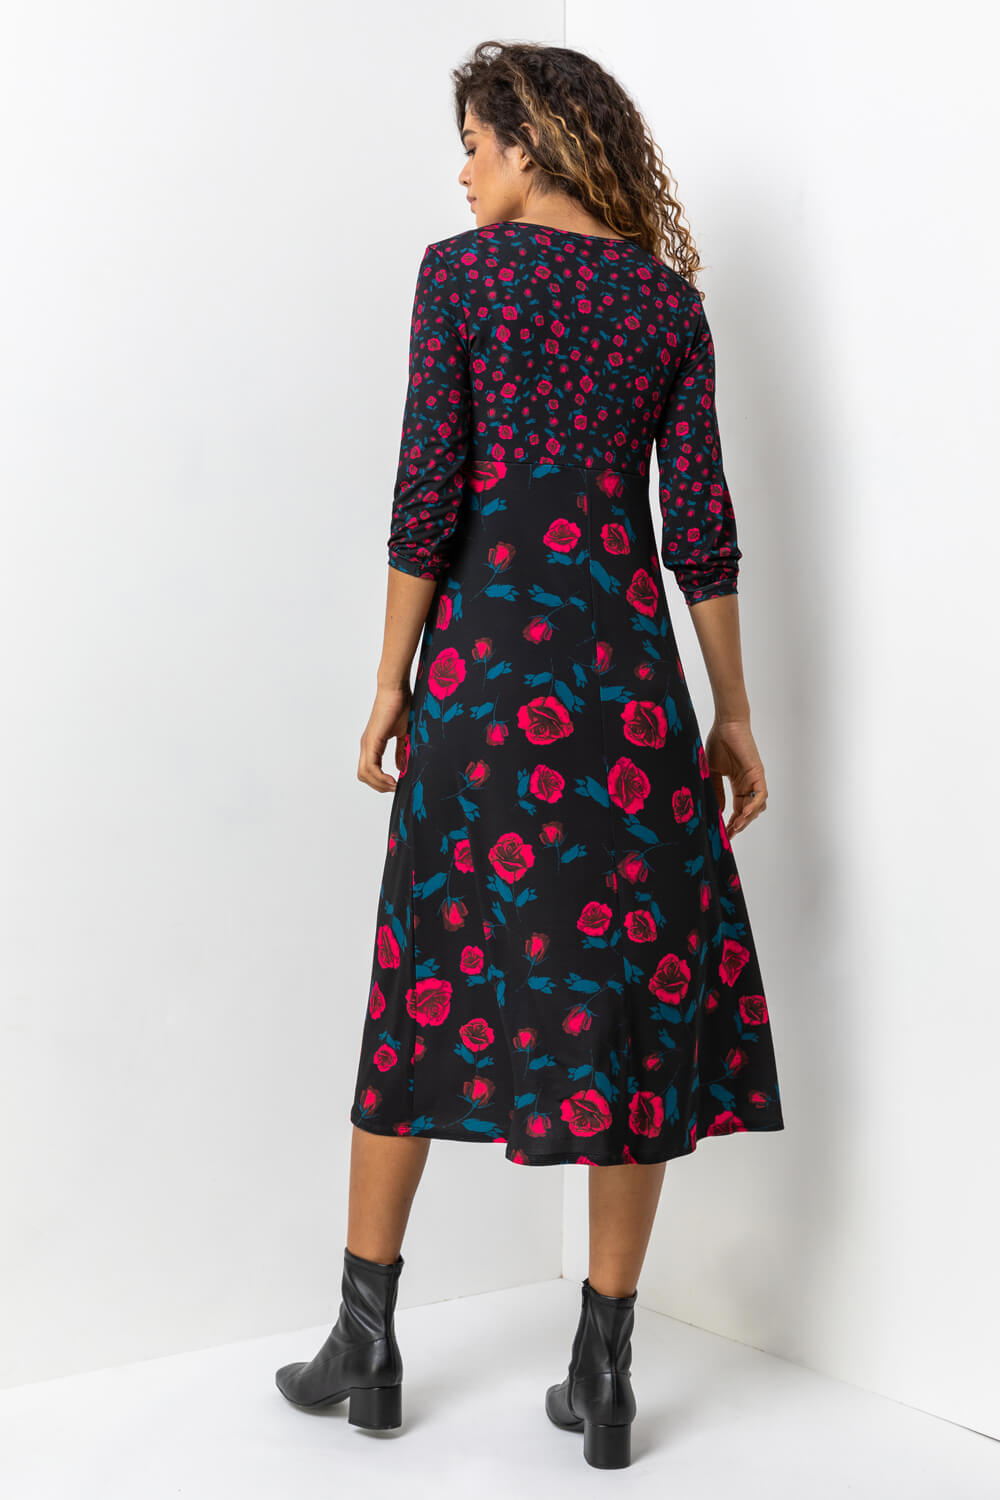 PINK Contrast Floral Print Midi Dress, Image 2 of 5